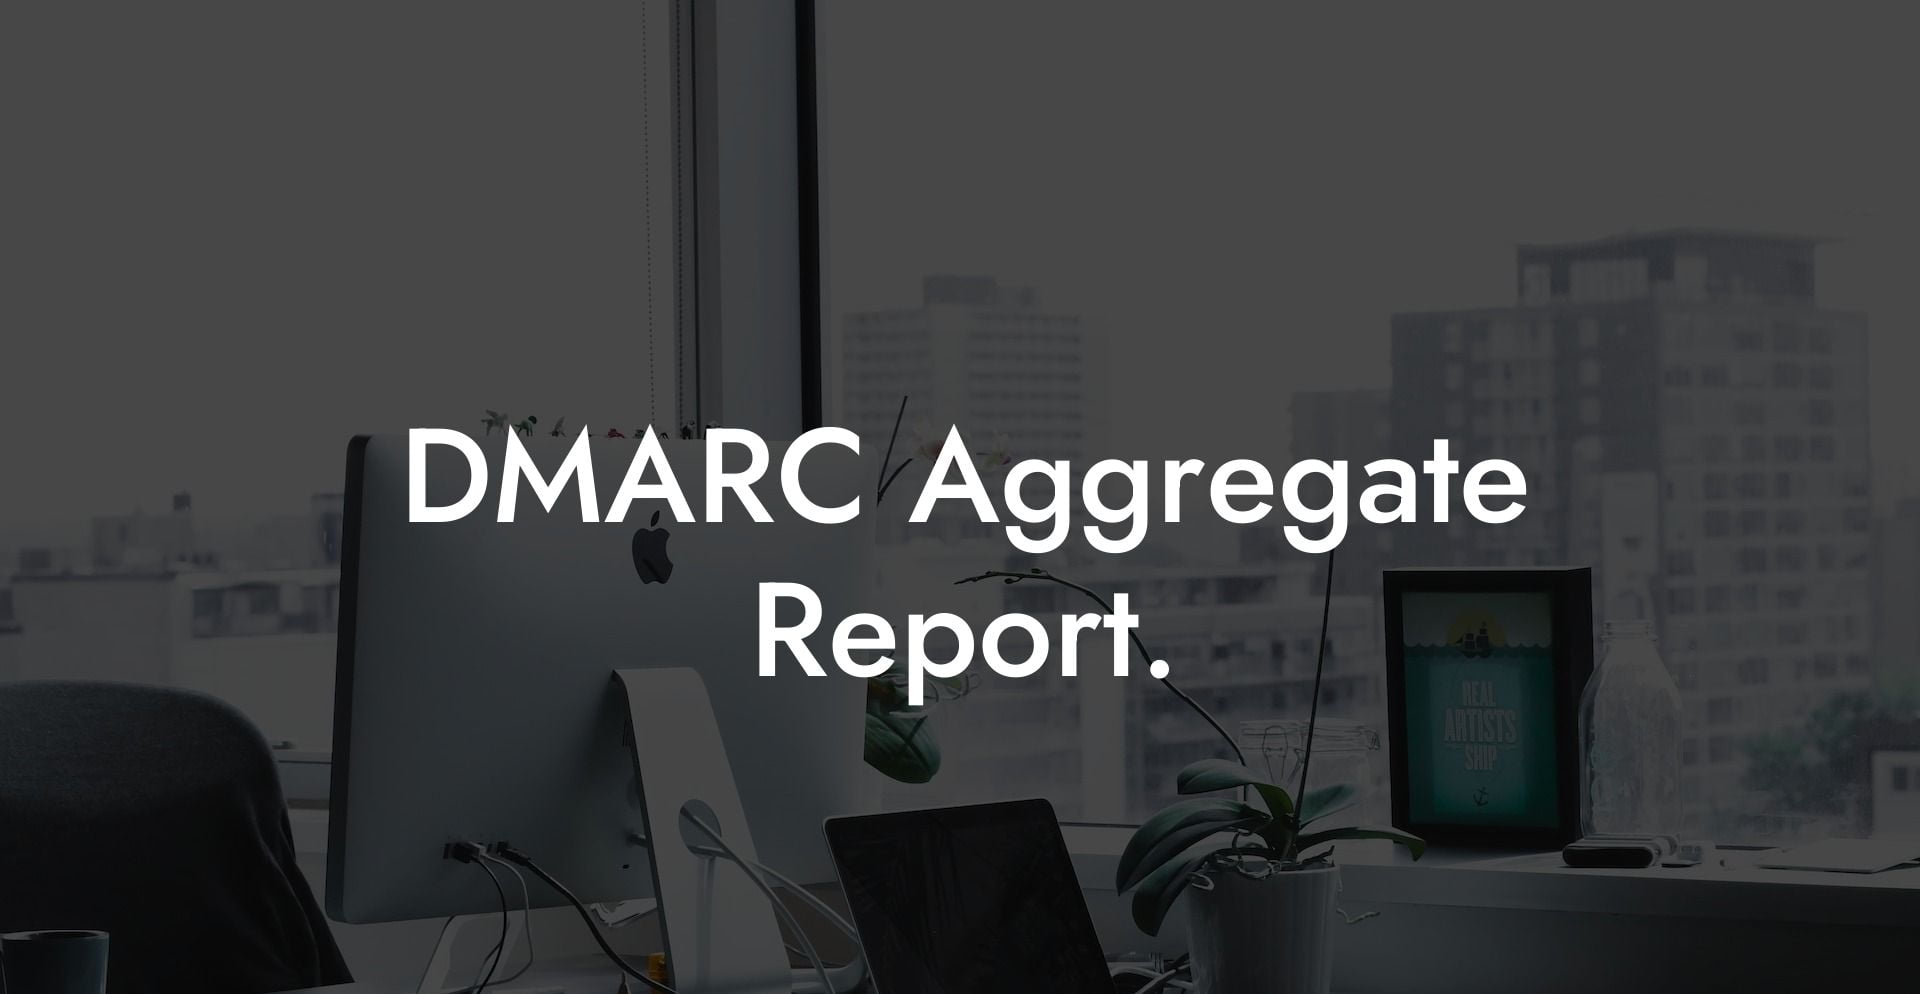 DMARC Aggregate Report.